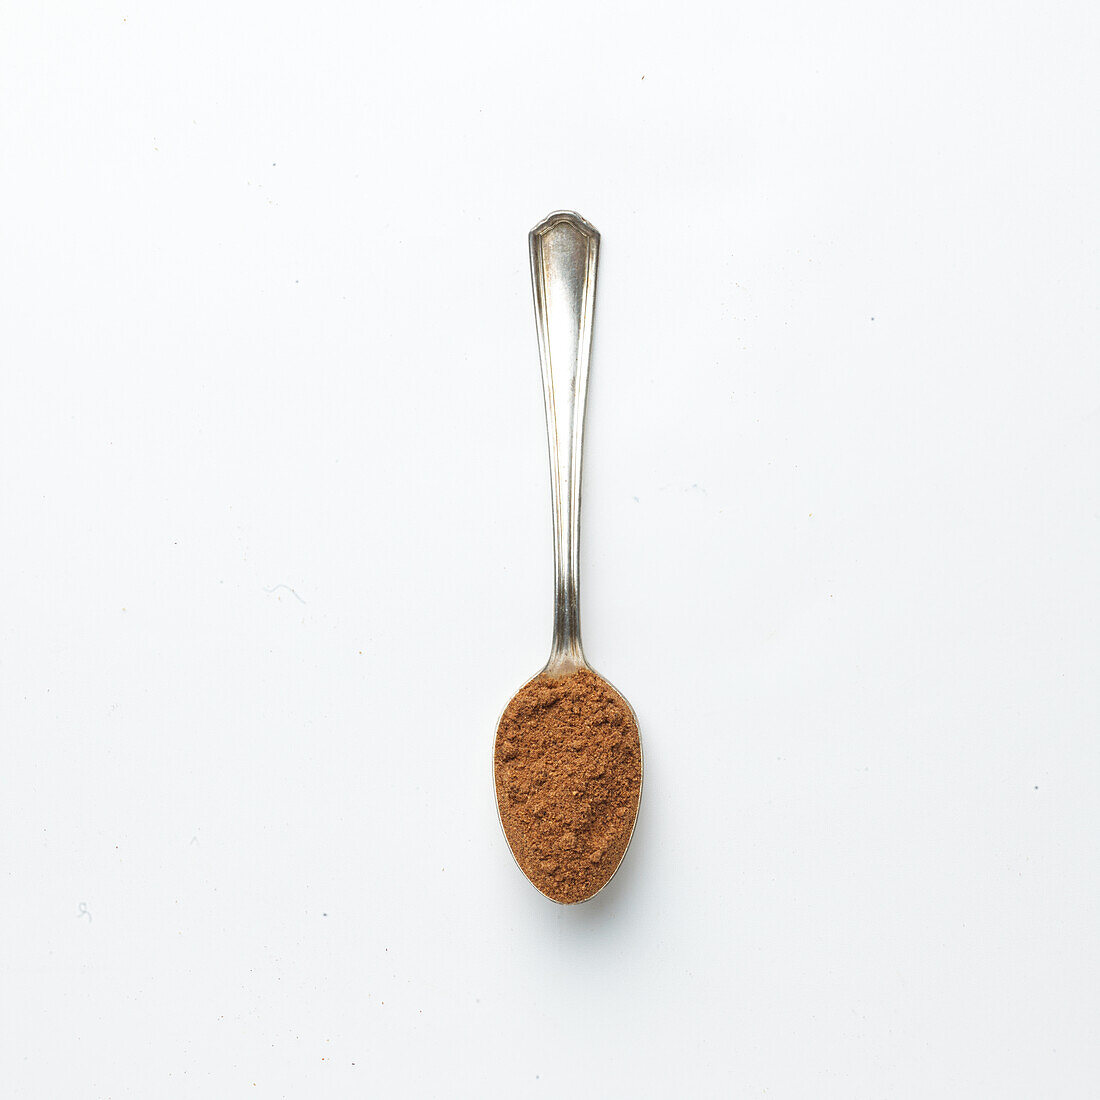 Spoonful of ground nutmeg